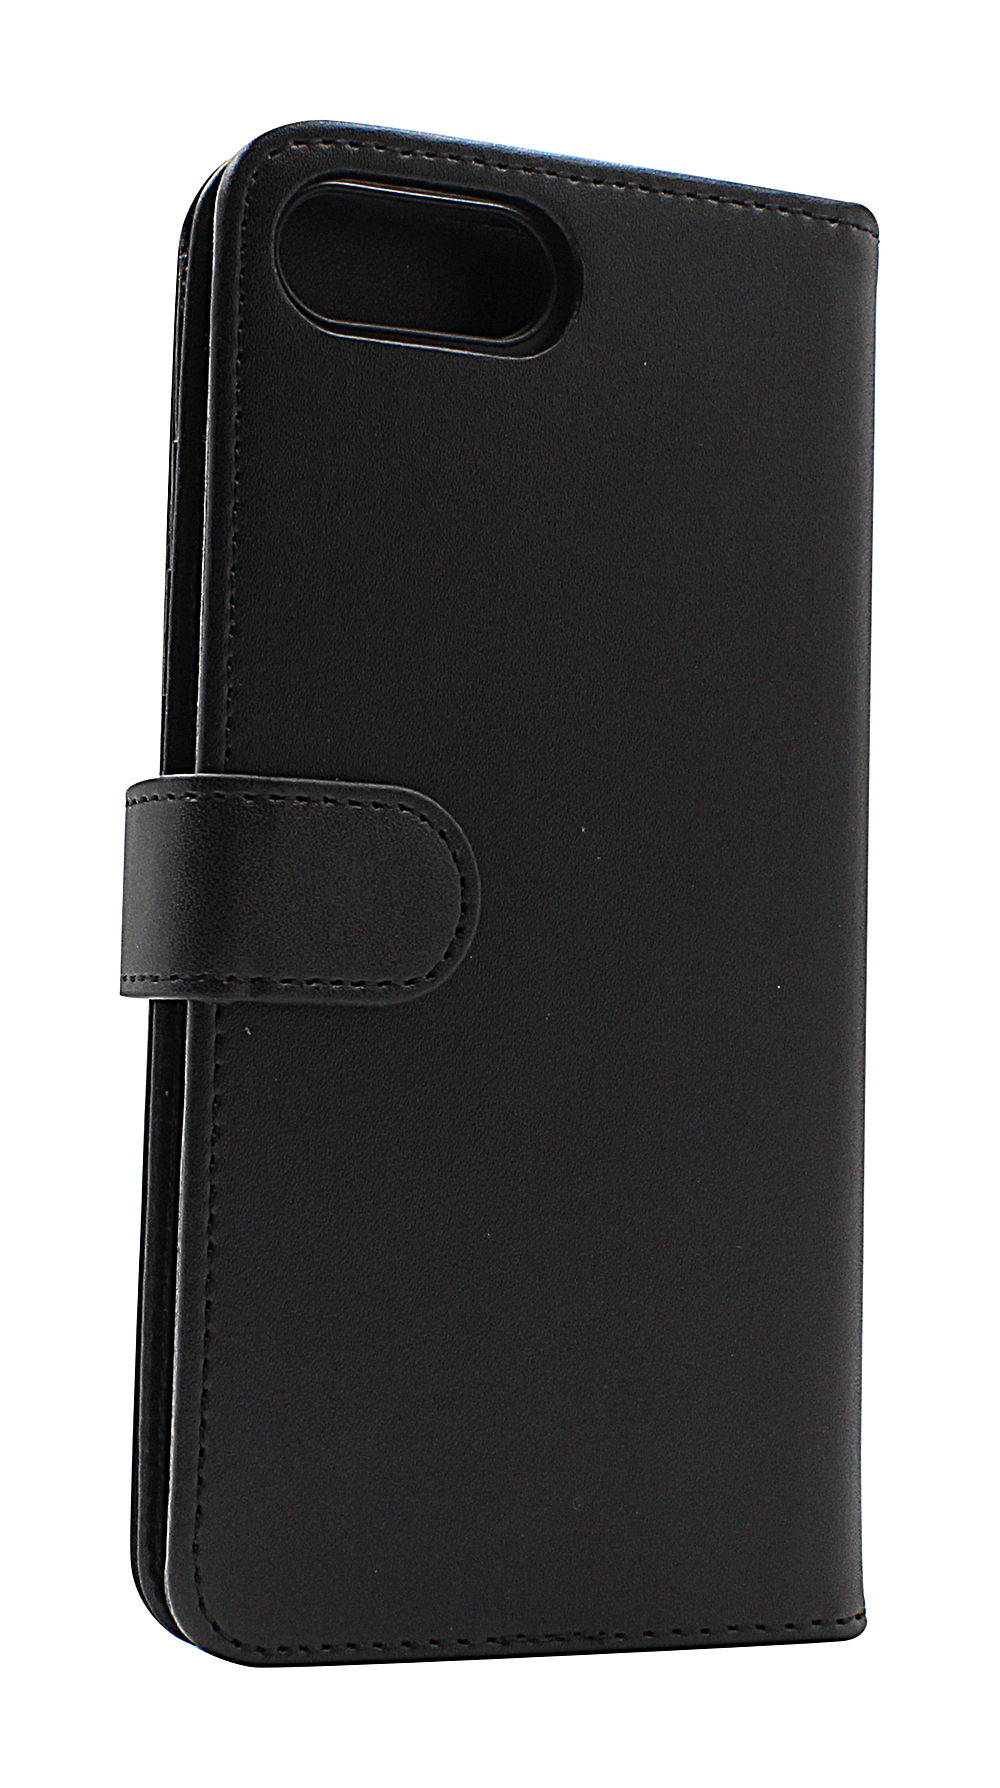 CoverInSkimblocker XL Wallet iPhone 6/7/8 Plus